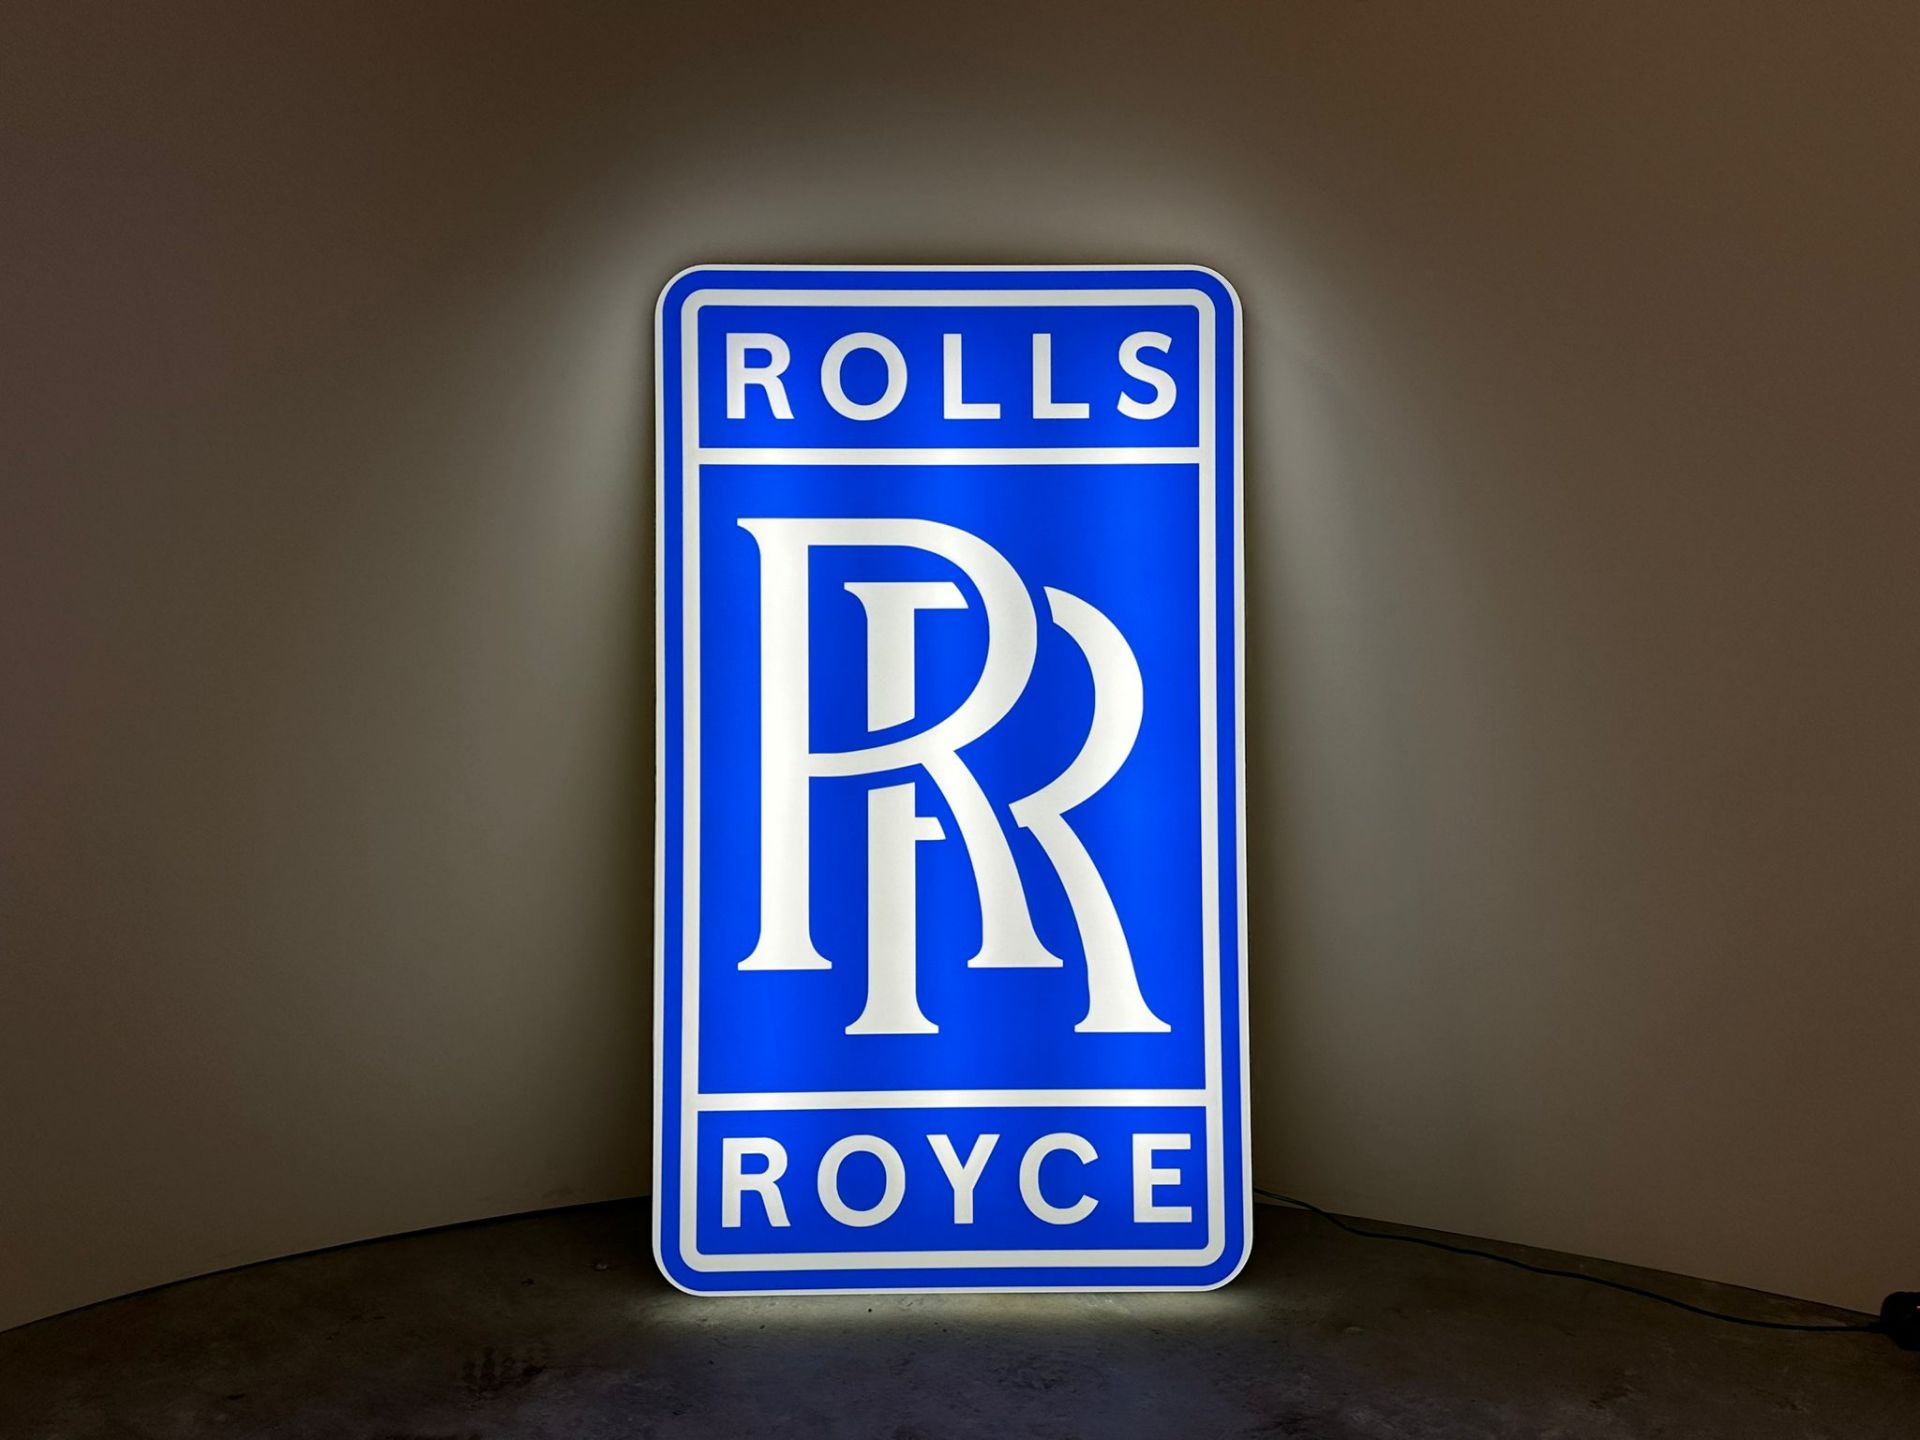 Rolls Royce illuminated sign - Image 4 of 9